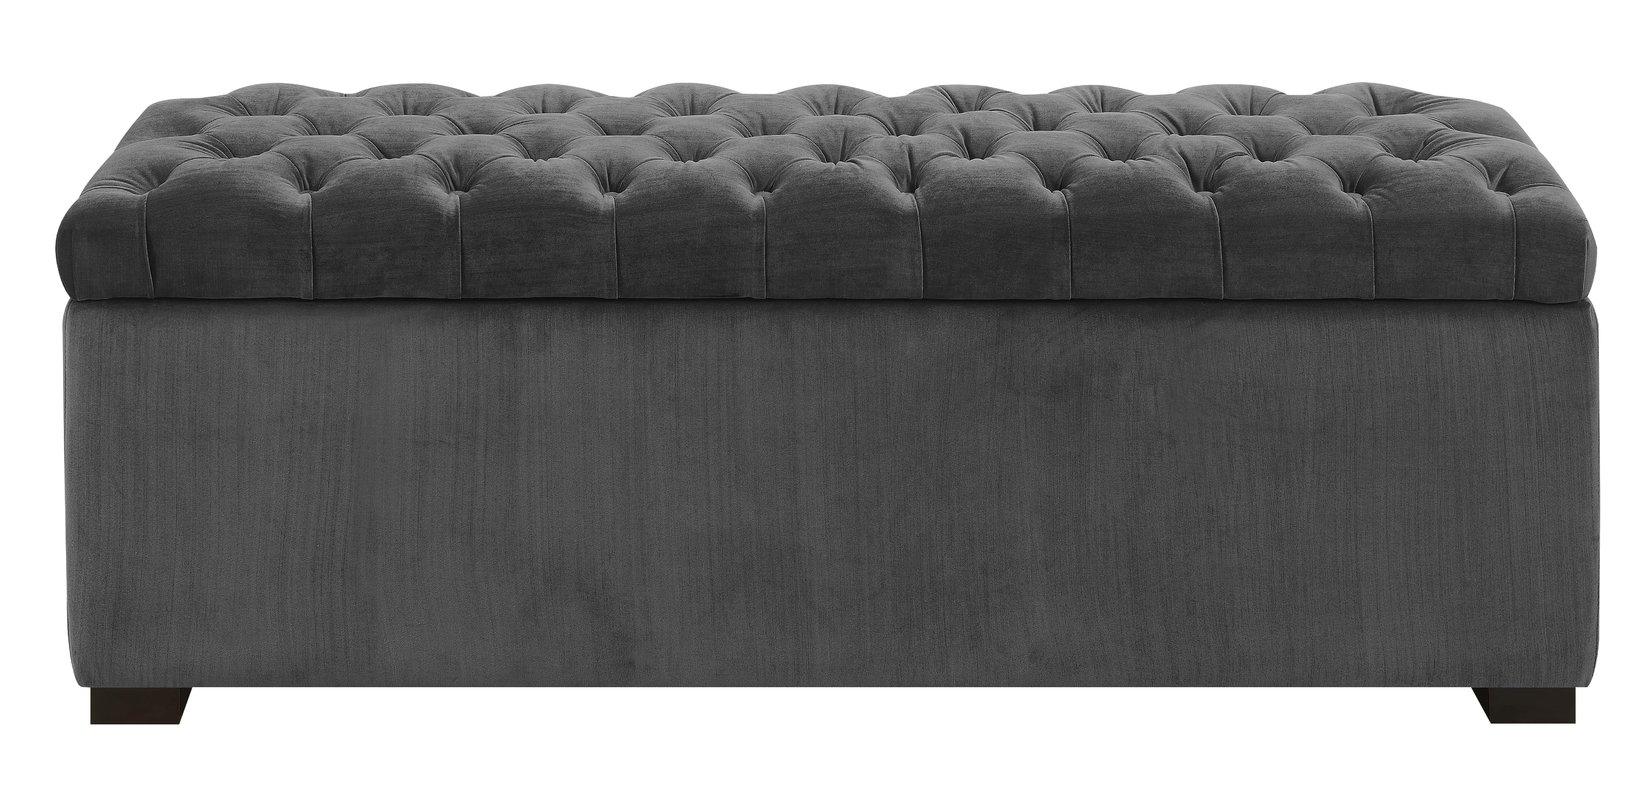 Mabel Shoe Upholstered Storage Bench - Image 1